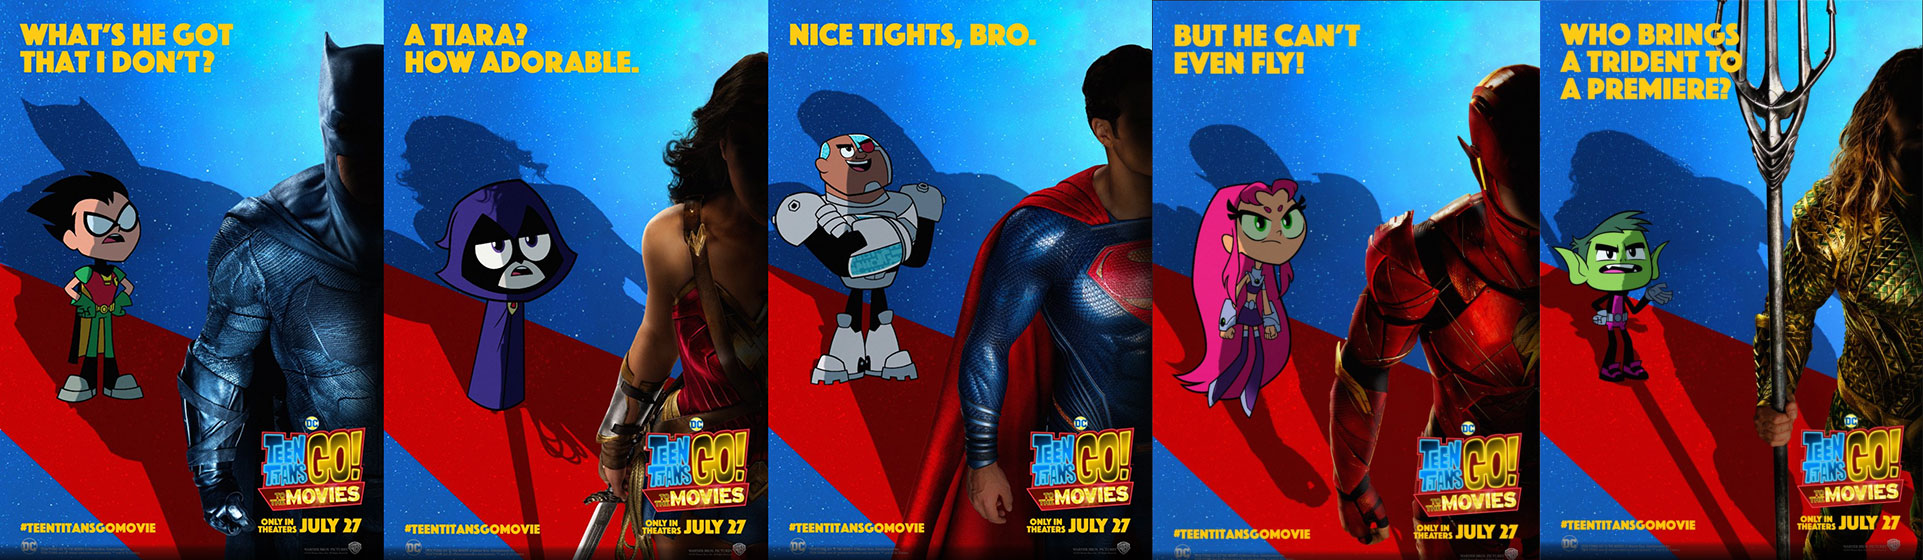 Movie Posters - DC Comics News